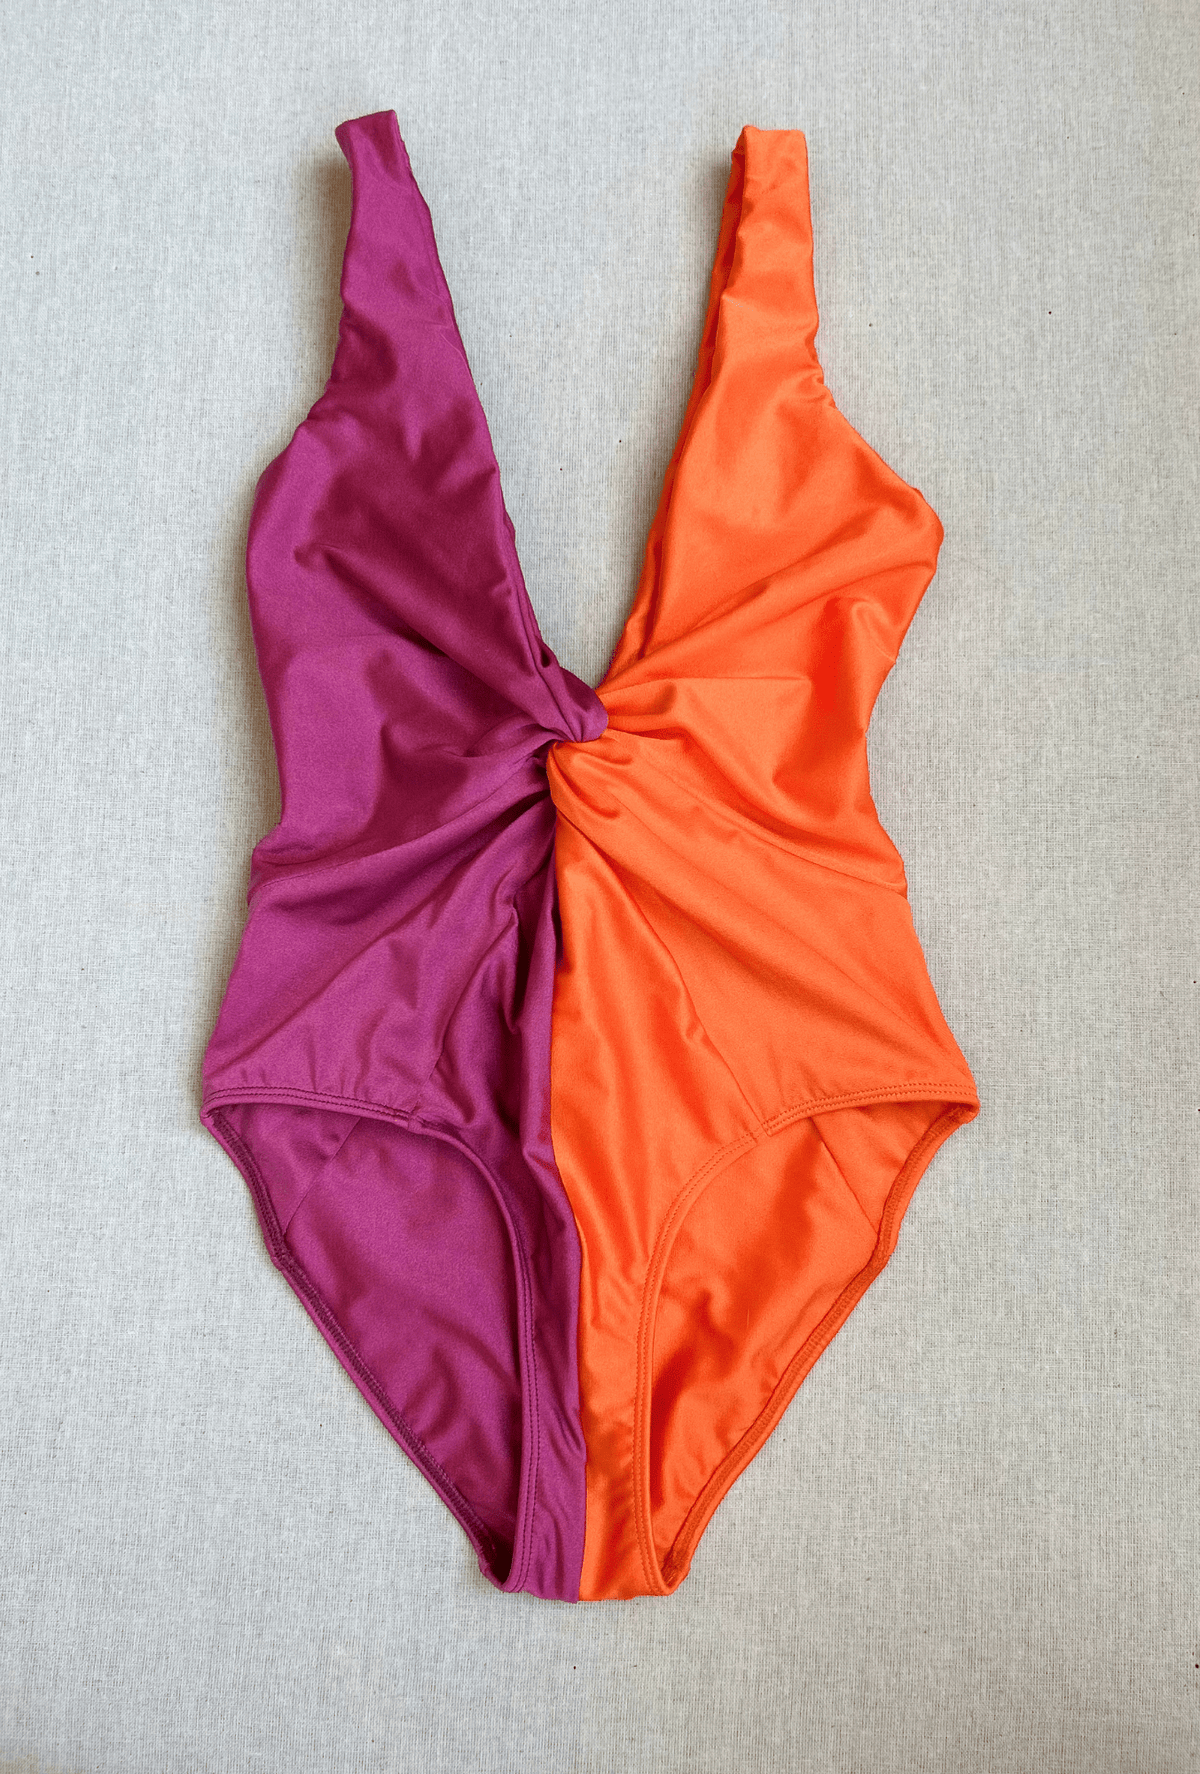 olivia one piece in purple / orange shine - size xs